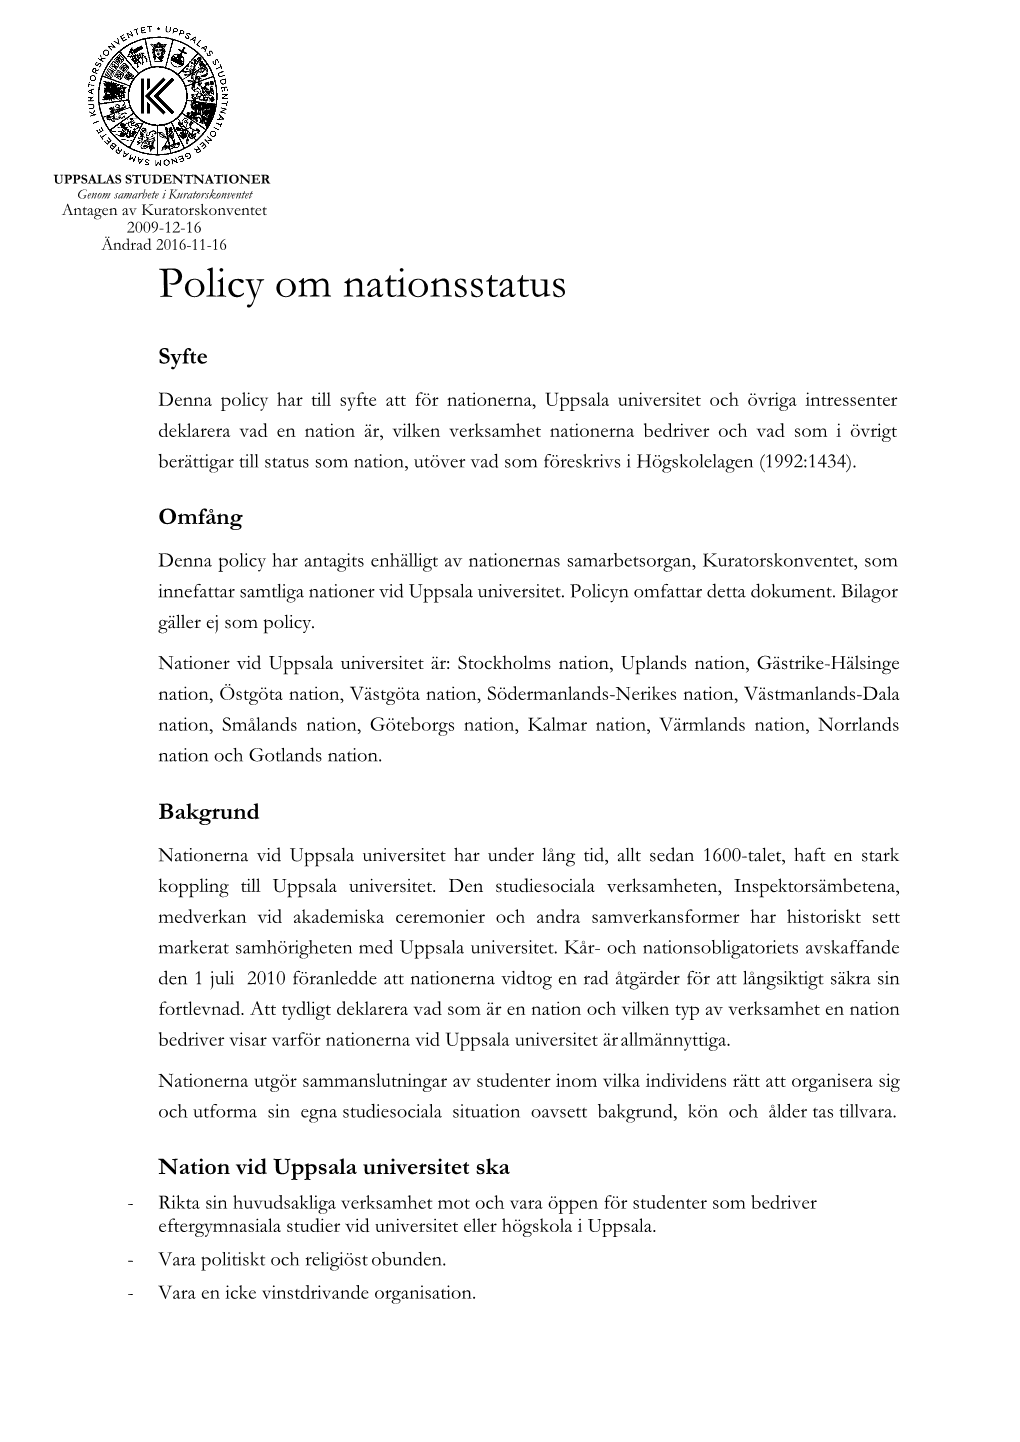 Policy Om Nationsstatus